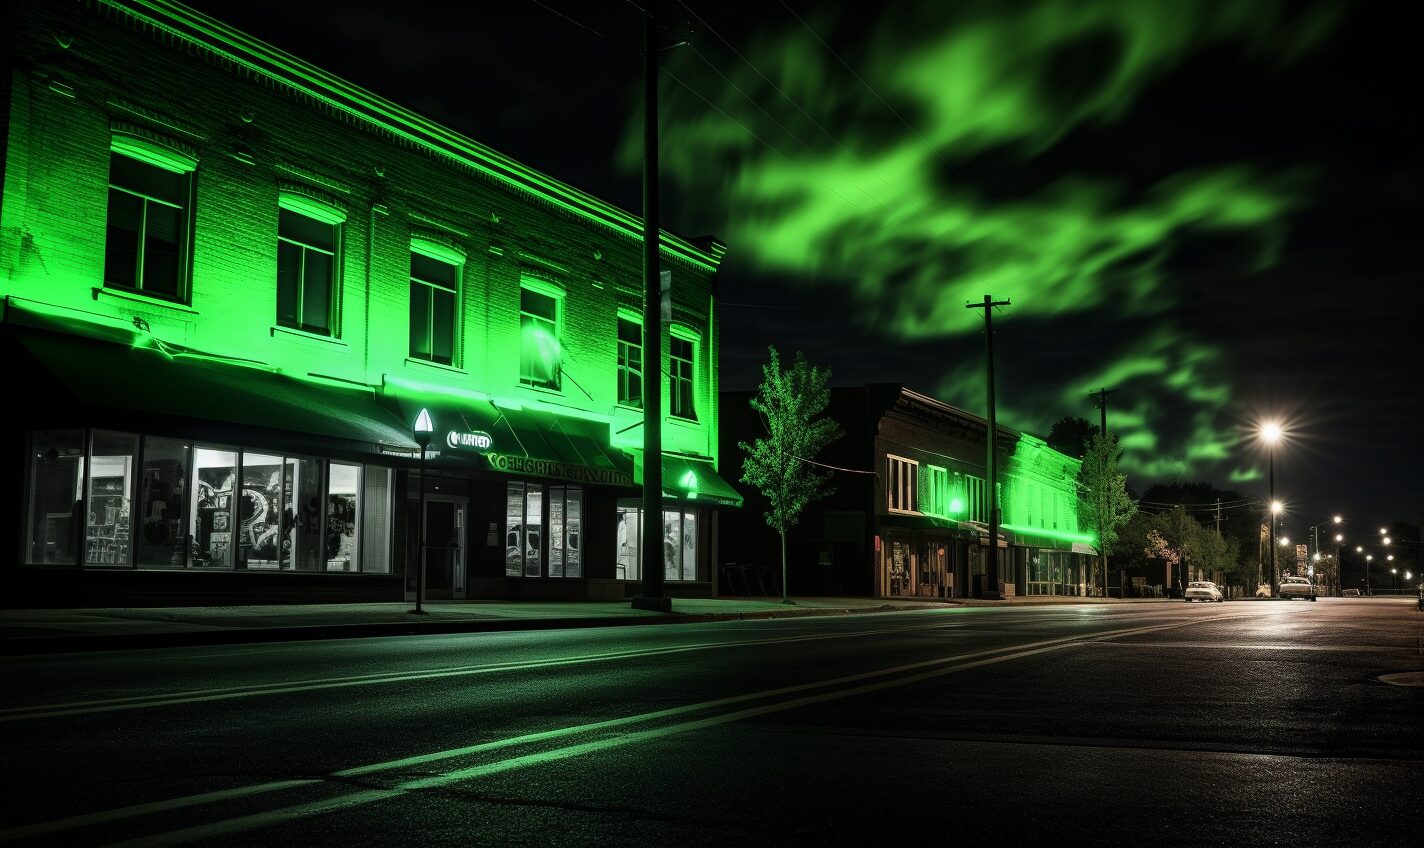 murfreesboro, tennessee in a black and neon green glow